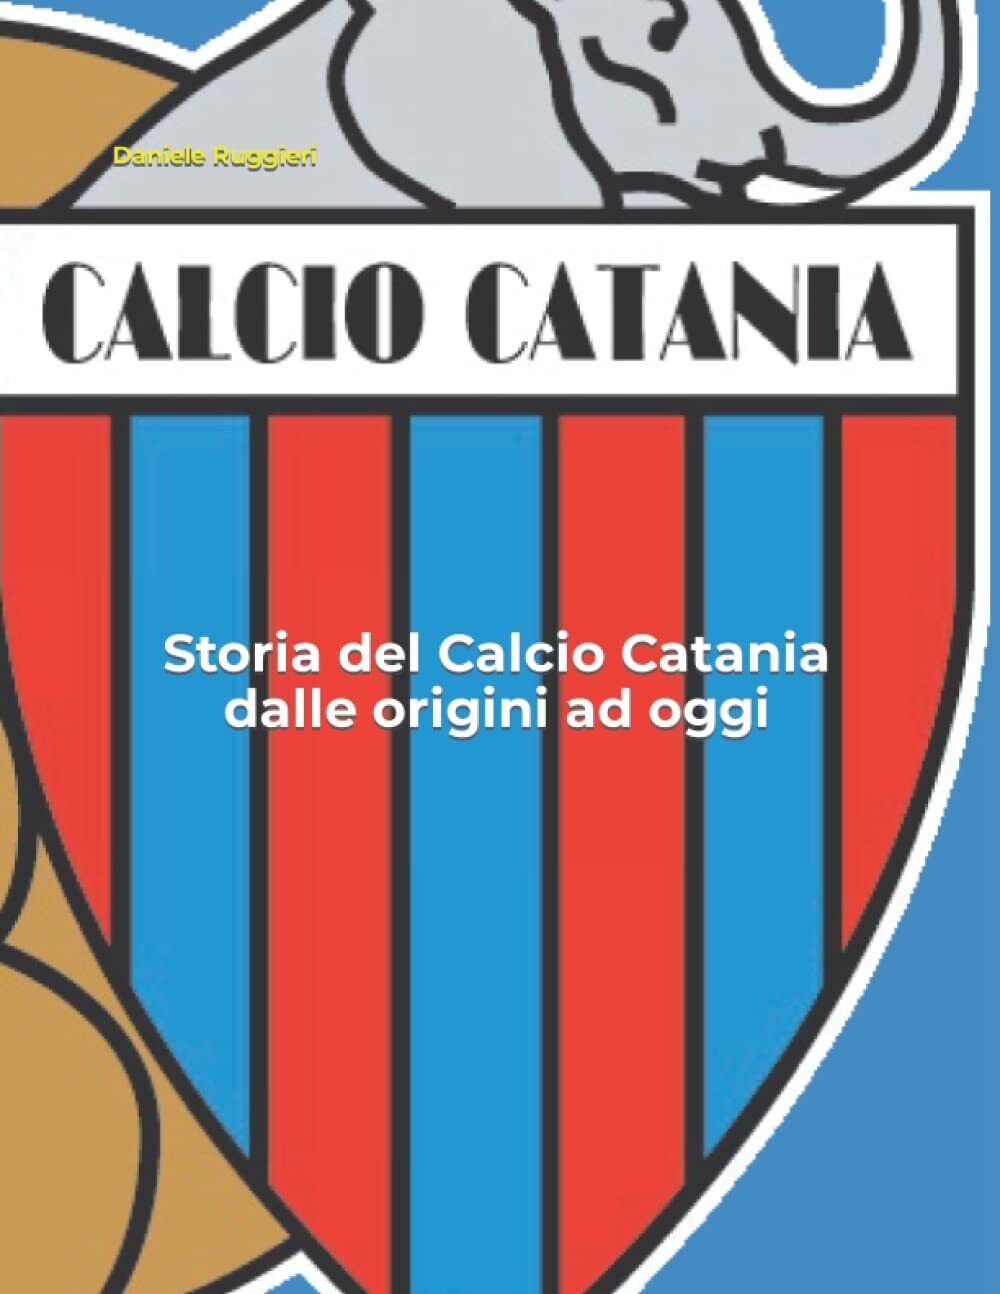 Storia del Calcio Catania dalle origini ad oggi - Daniele Ruggieri - 2021